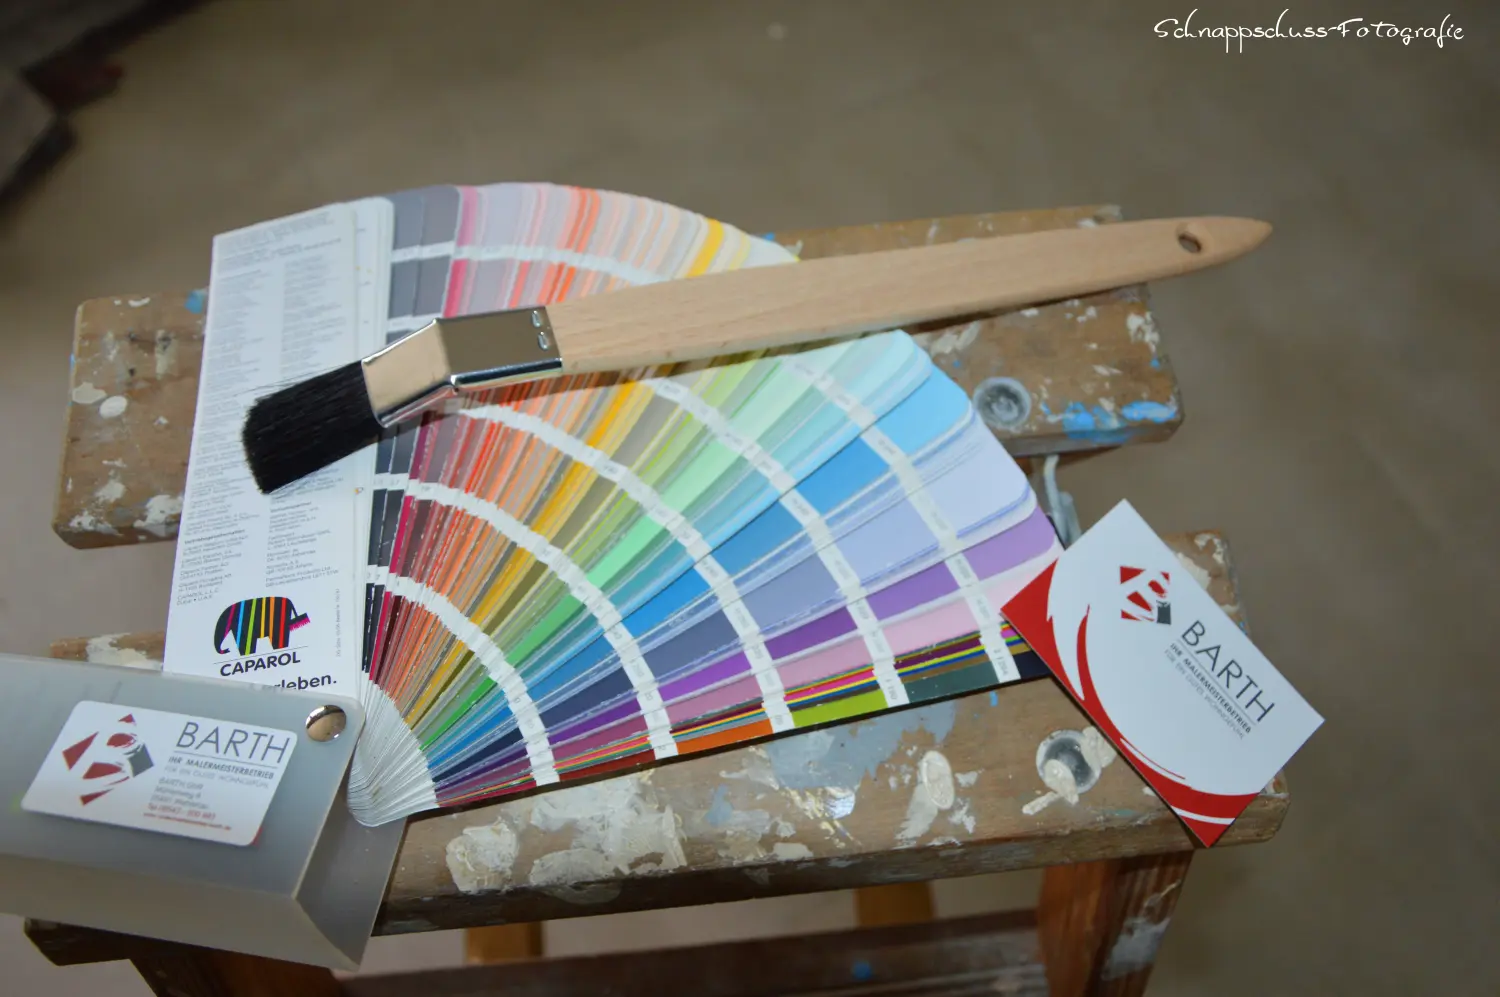 Farbpalette zur Farbauswahl